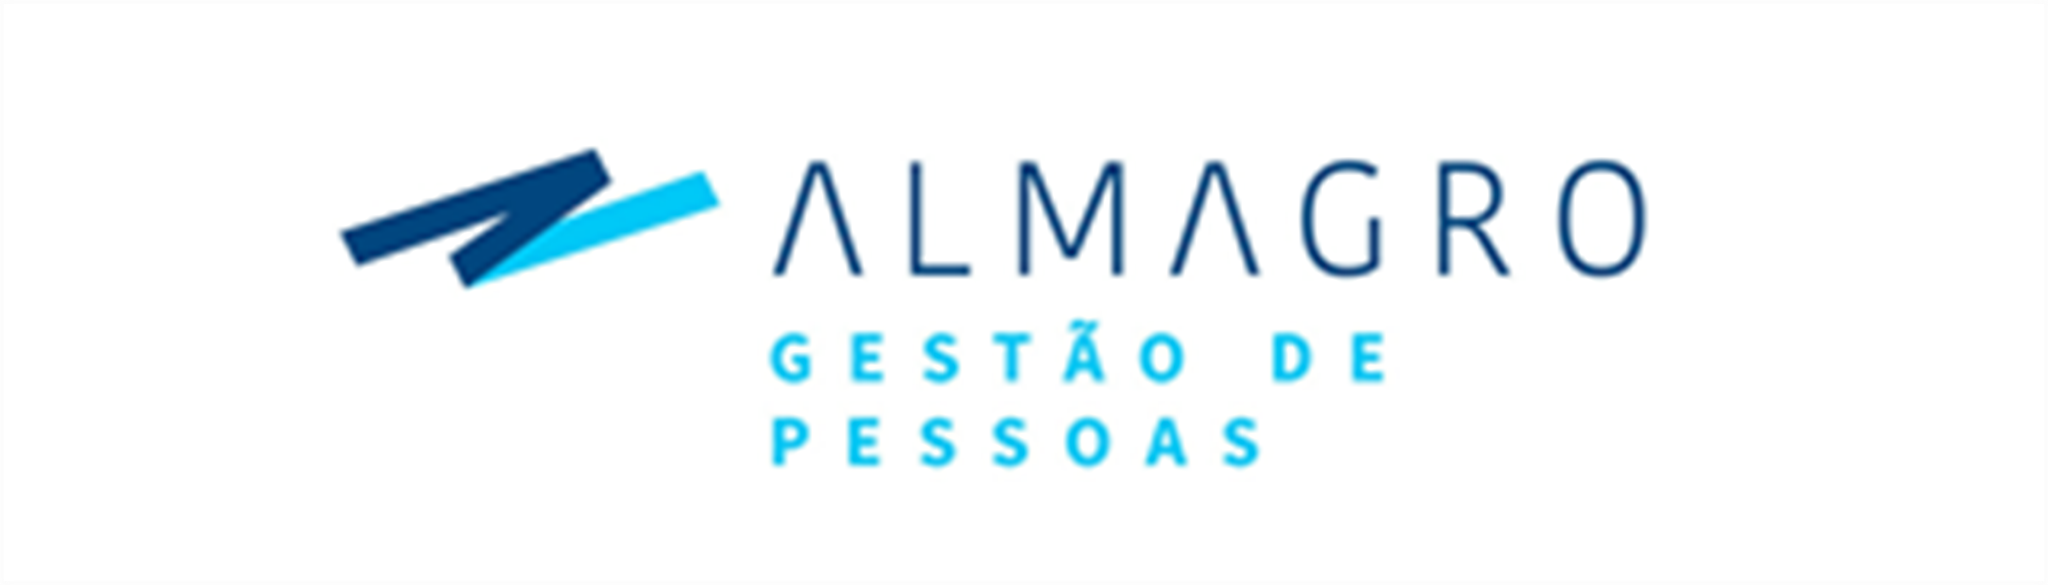 ALMAGRO GESTAO DE PESSOAS